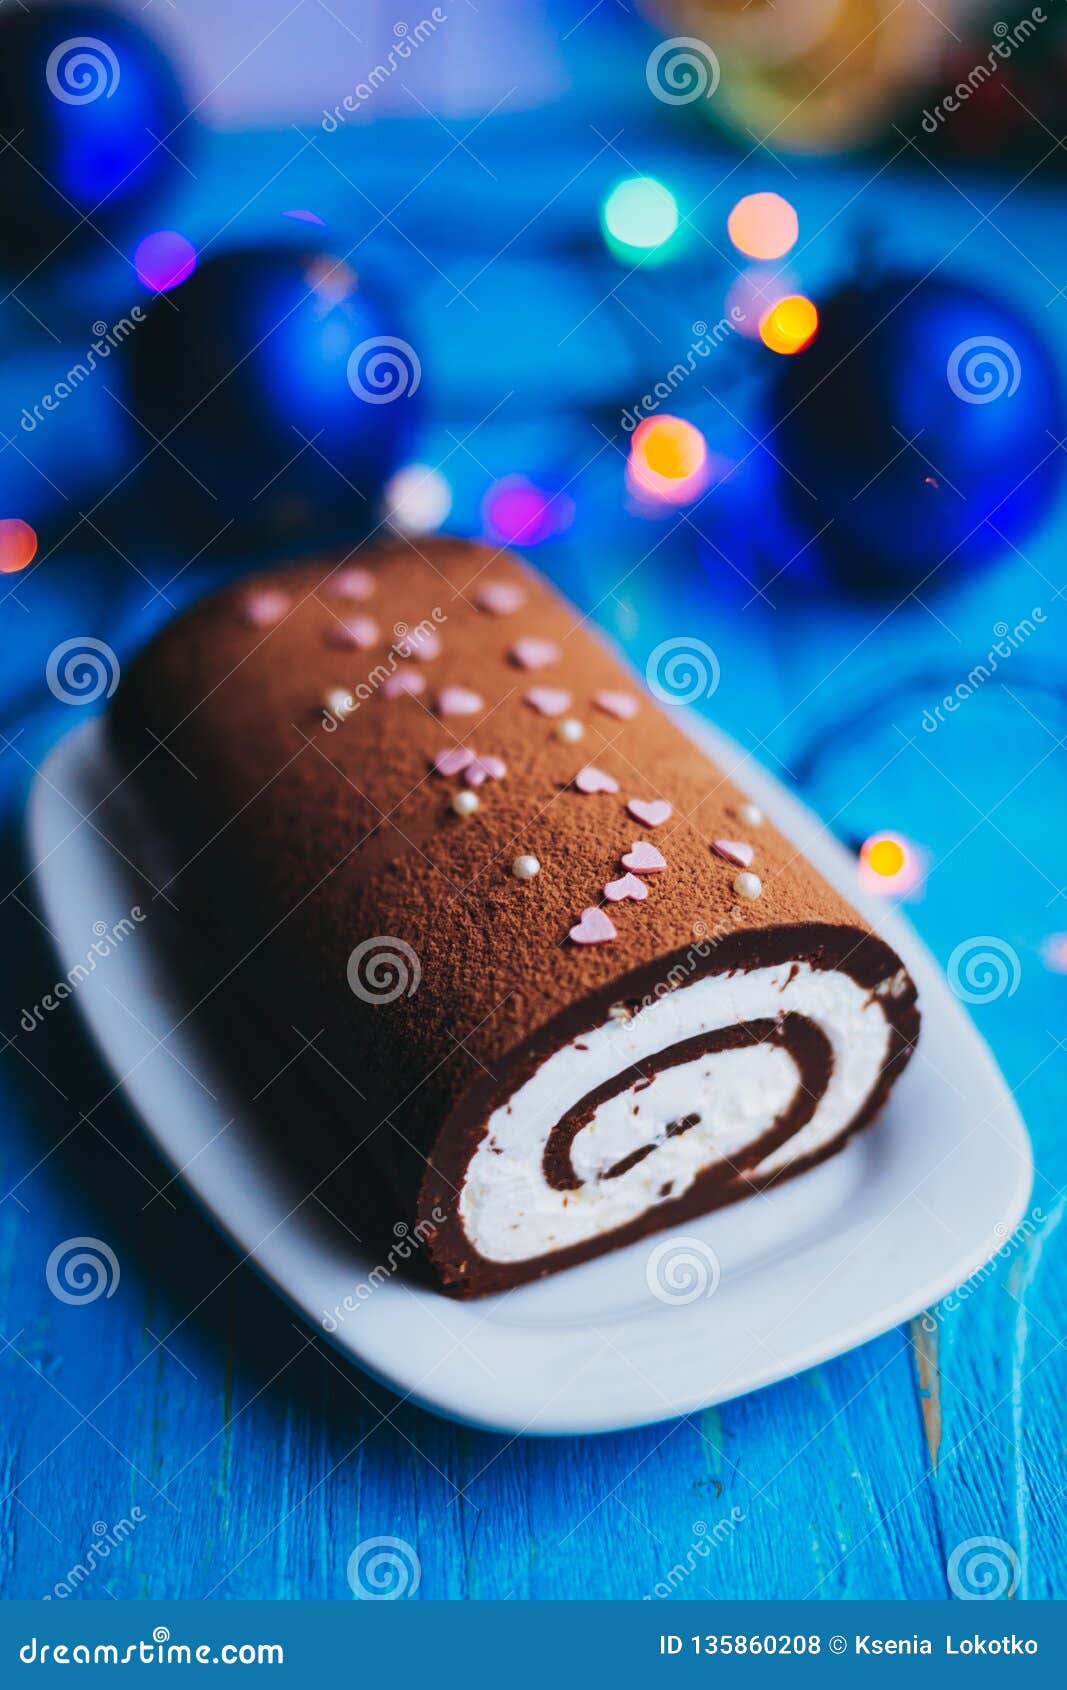 Chocolate Roll Christmas Log with Cream Stock Photo - Image of black ...